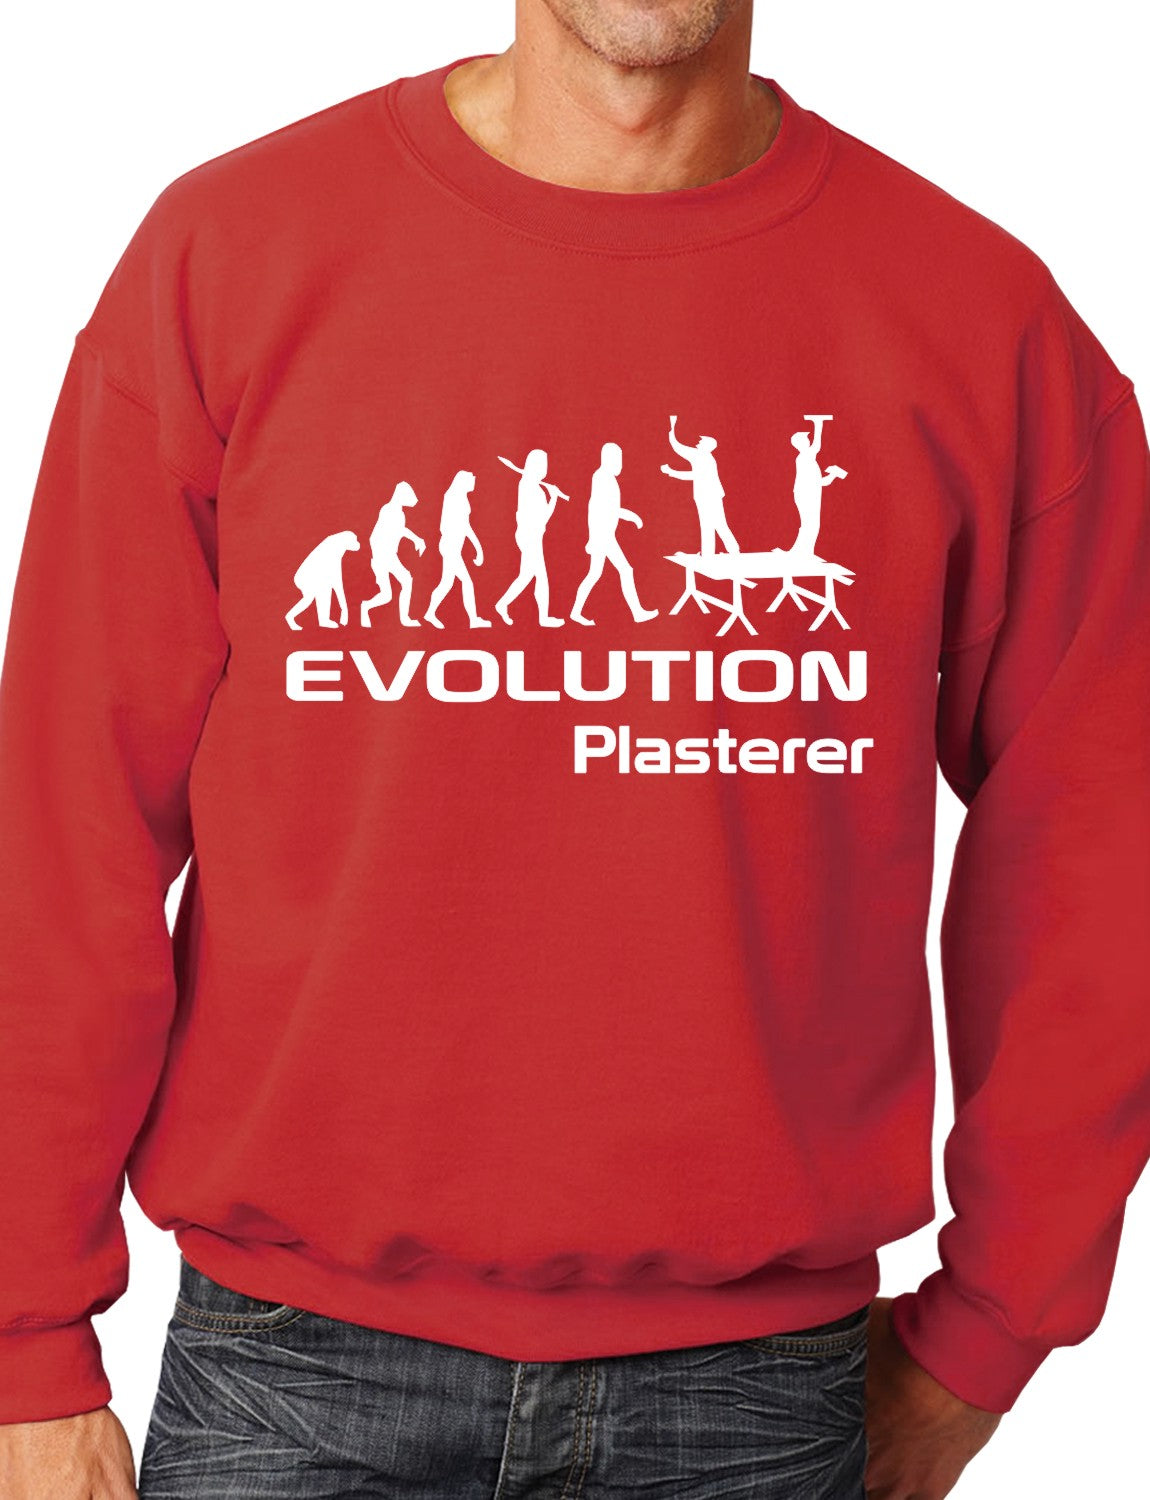 Evolution Of Carpenter Sweatshirt